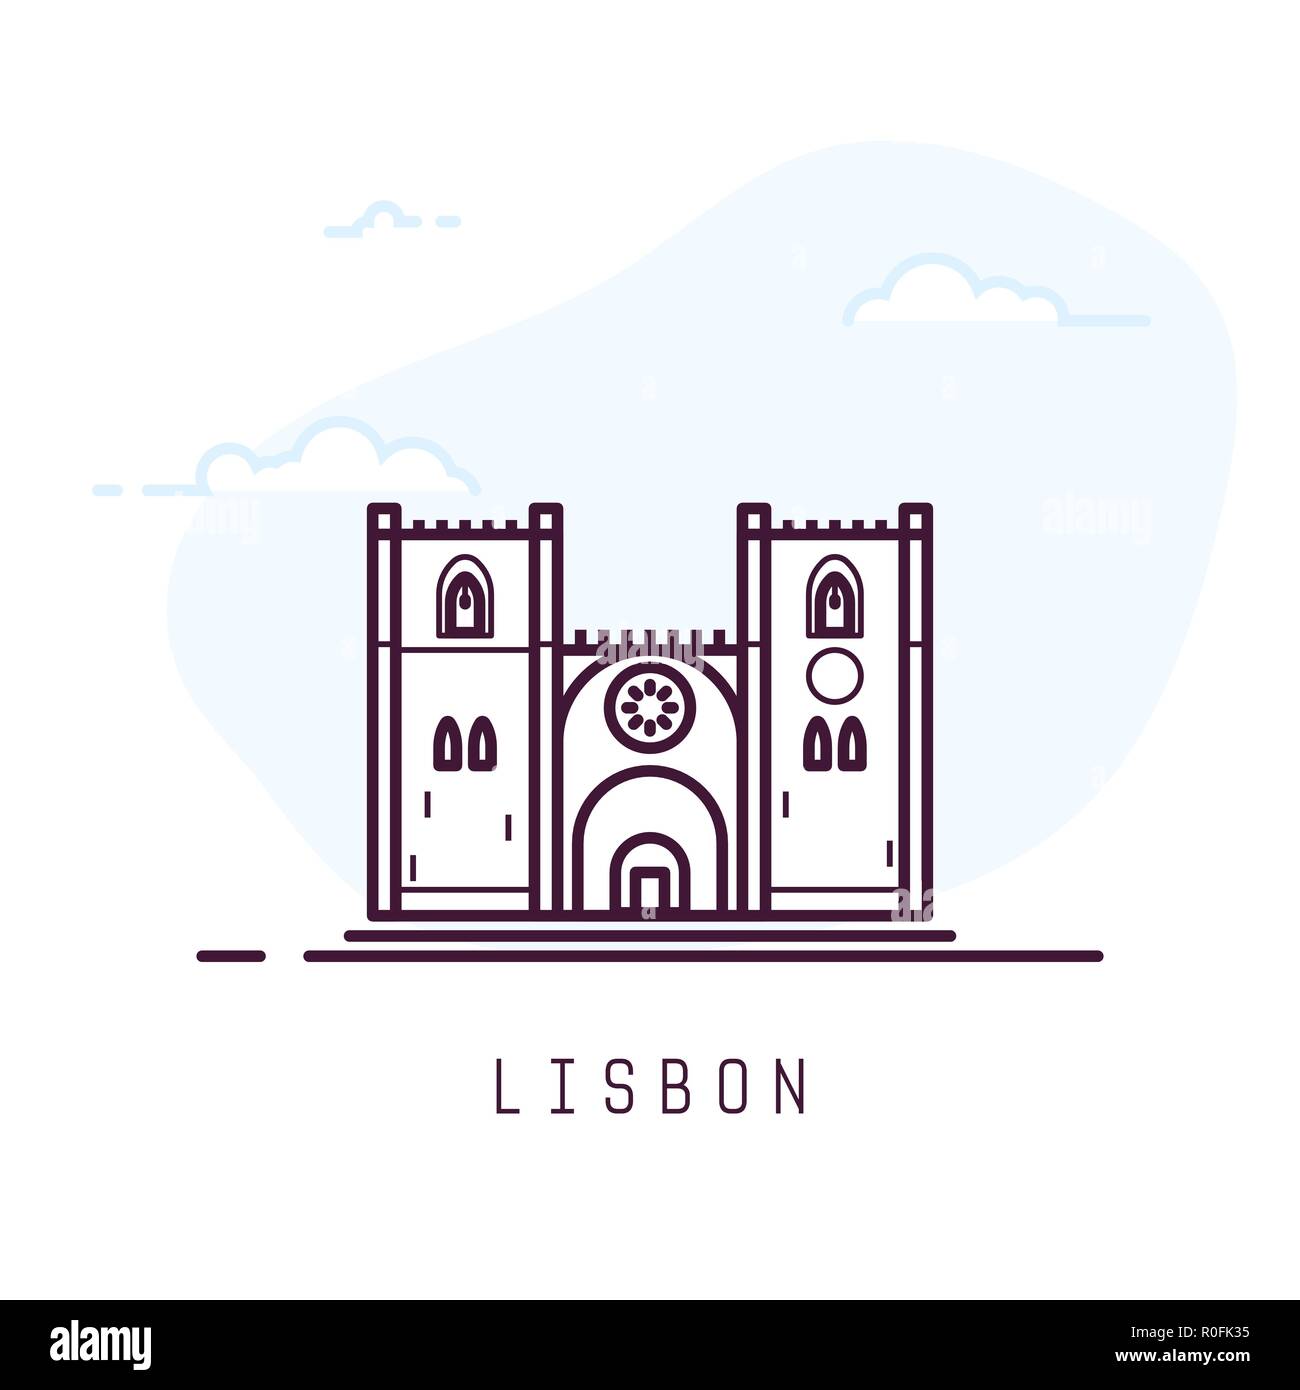 Lisbon line style building Stock Vector